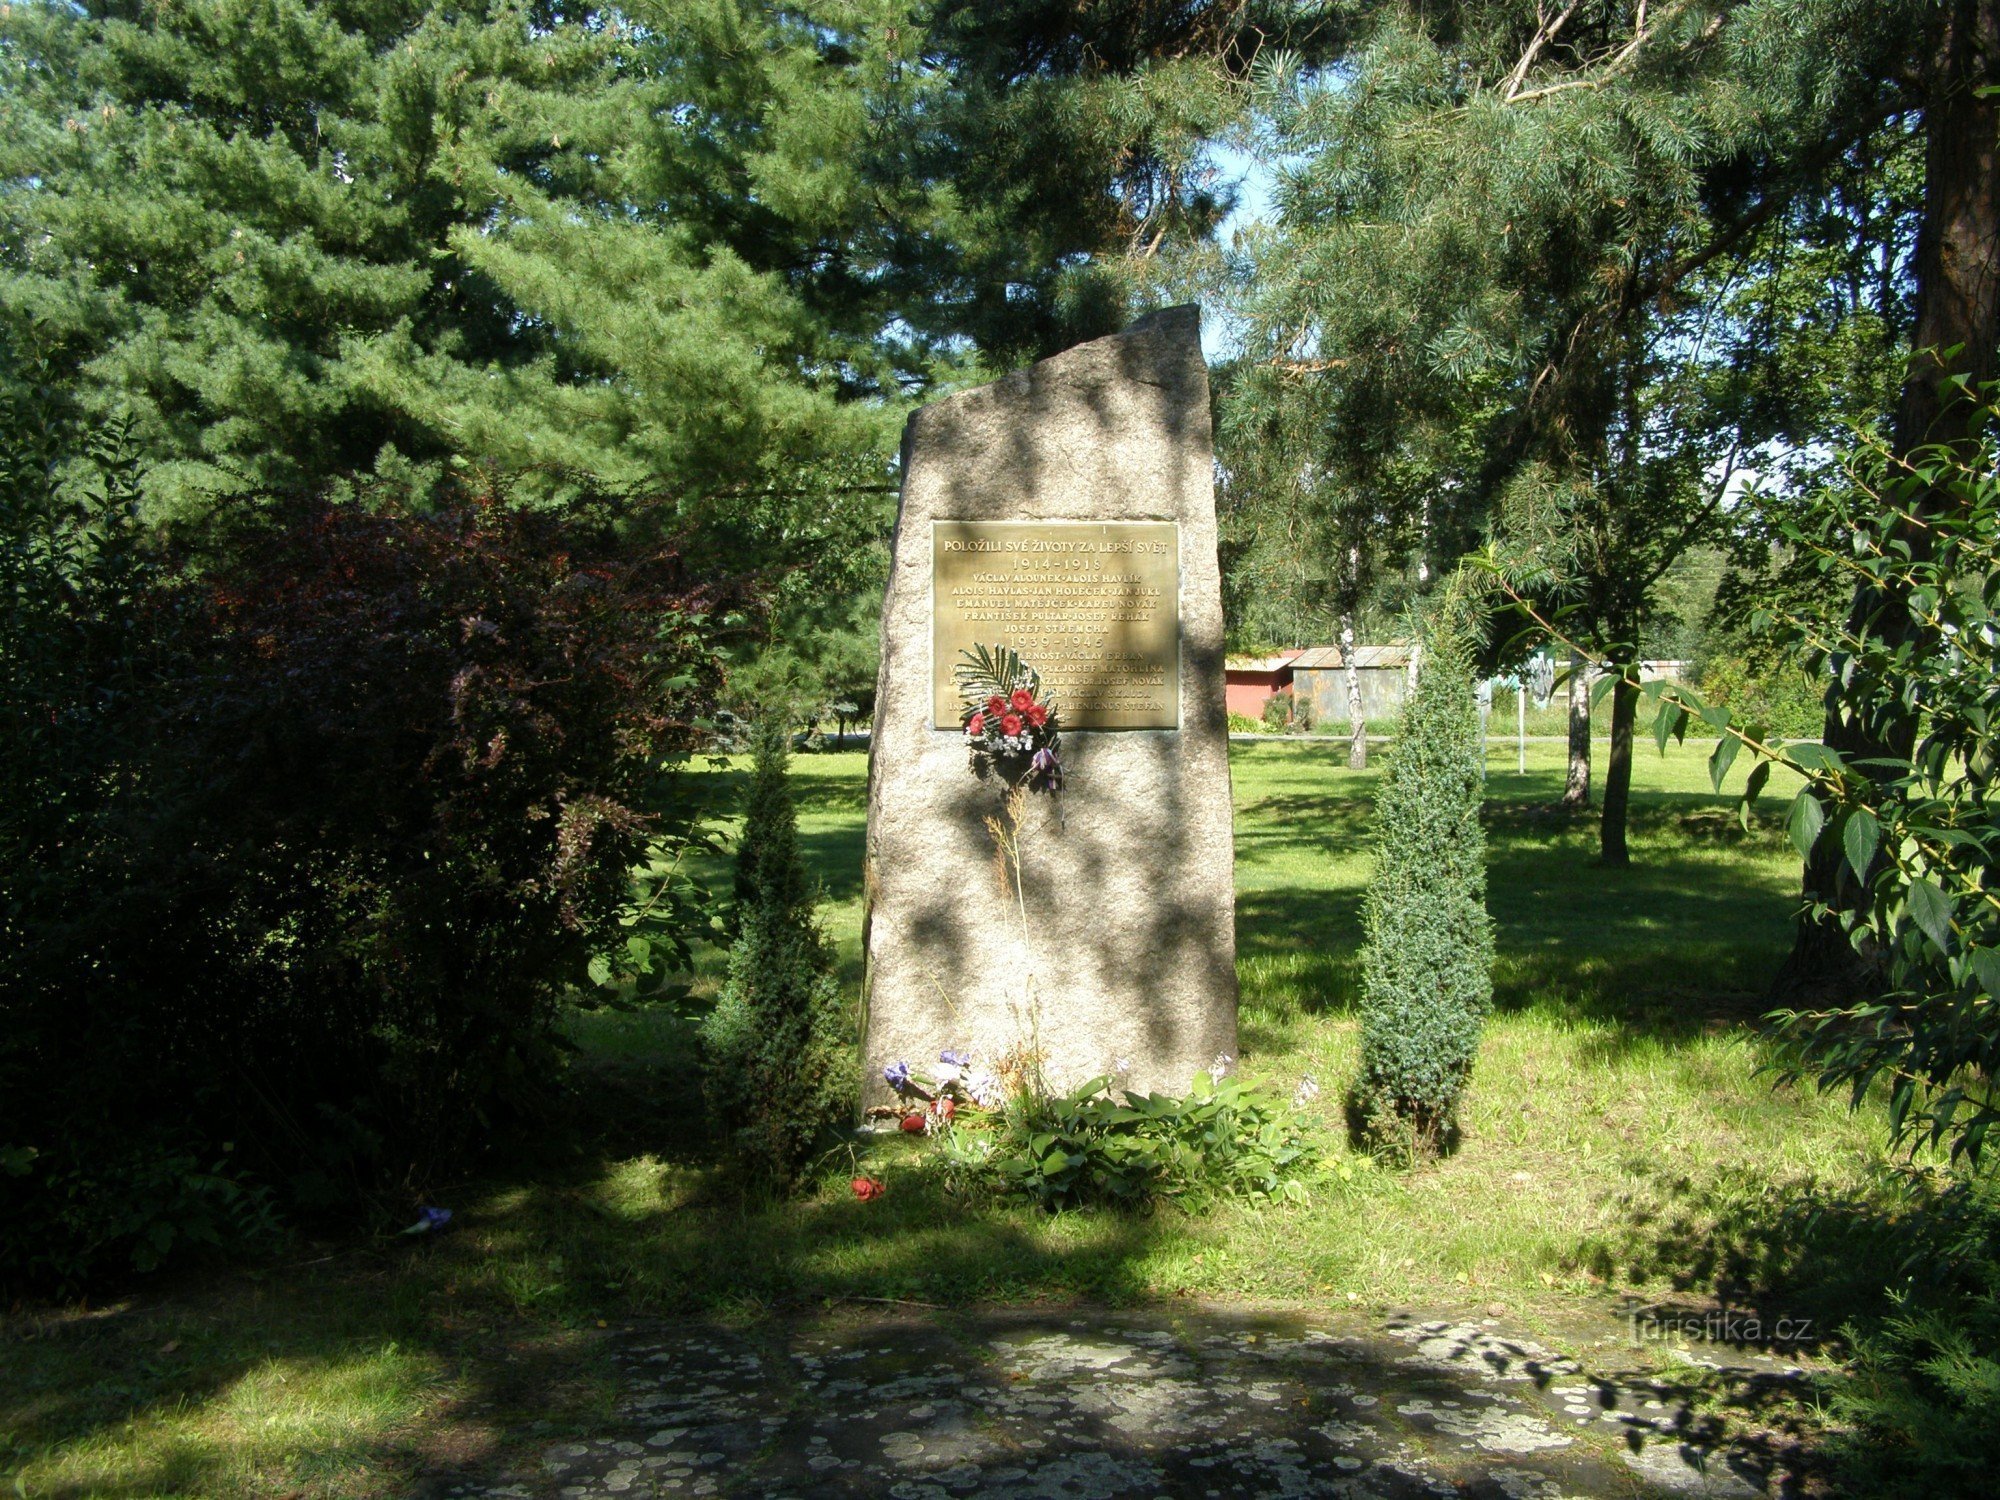 Hradec Králové - monumento alle vittime delle guerre nel sobborgo della Slesia